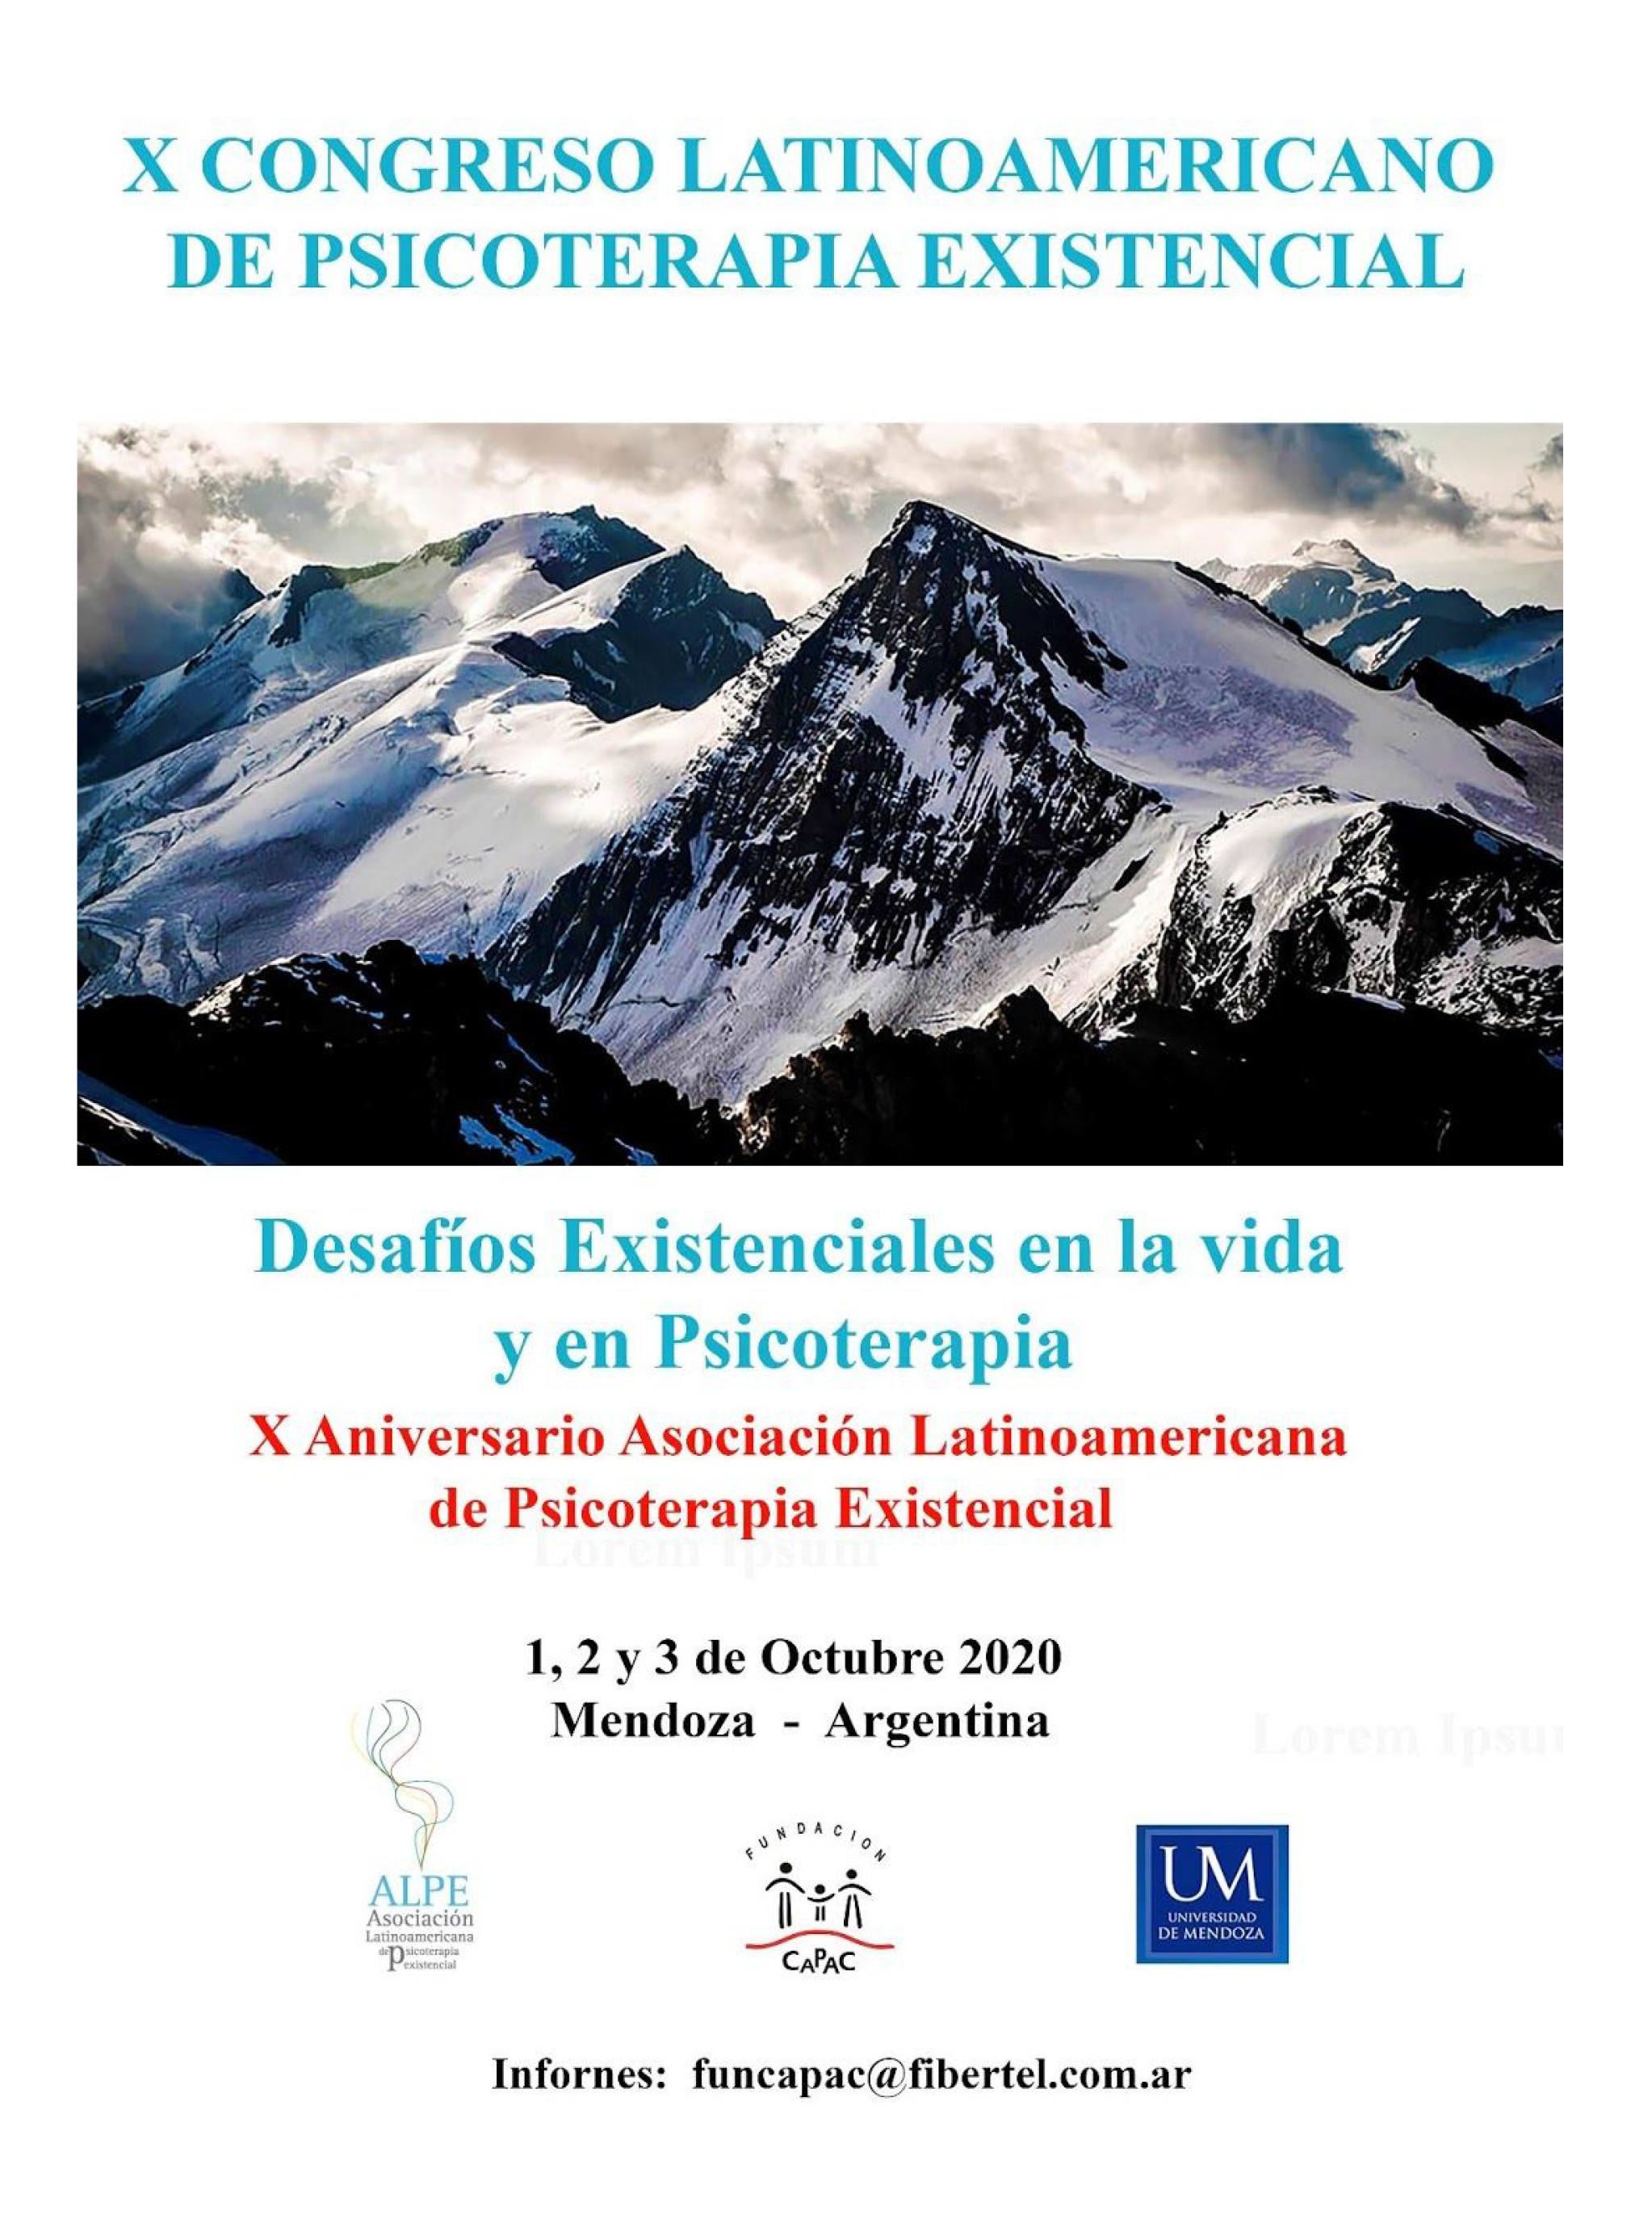 X Congreso Latinoamericano de Psicoterapia Existencial